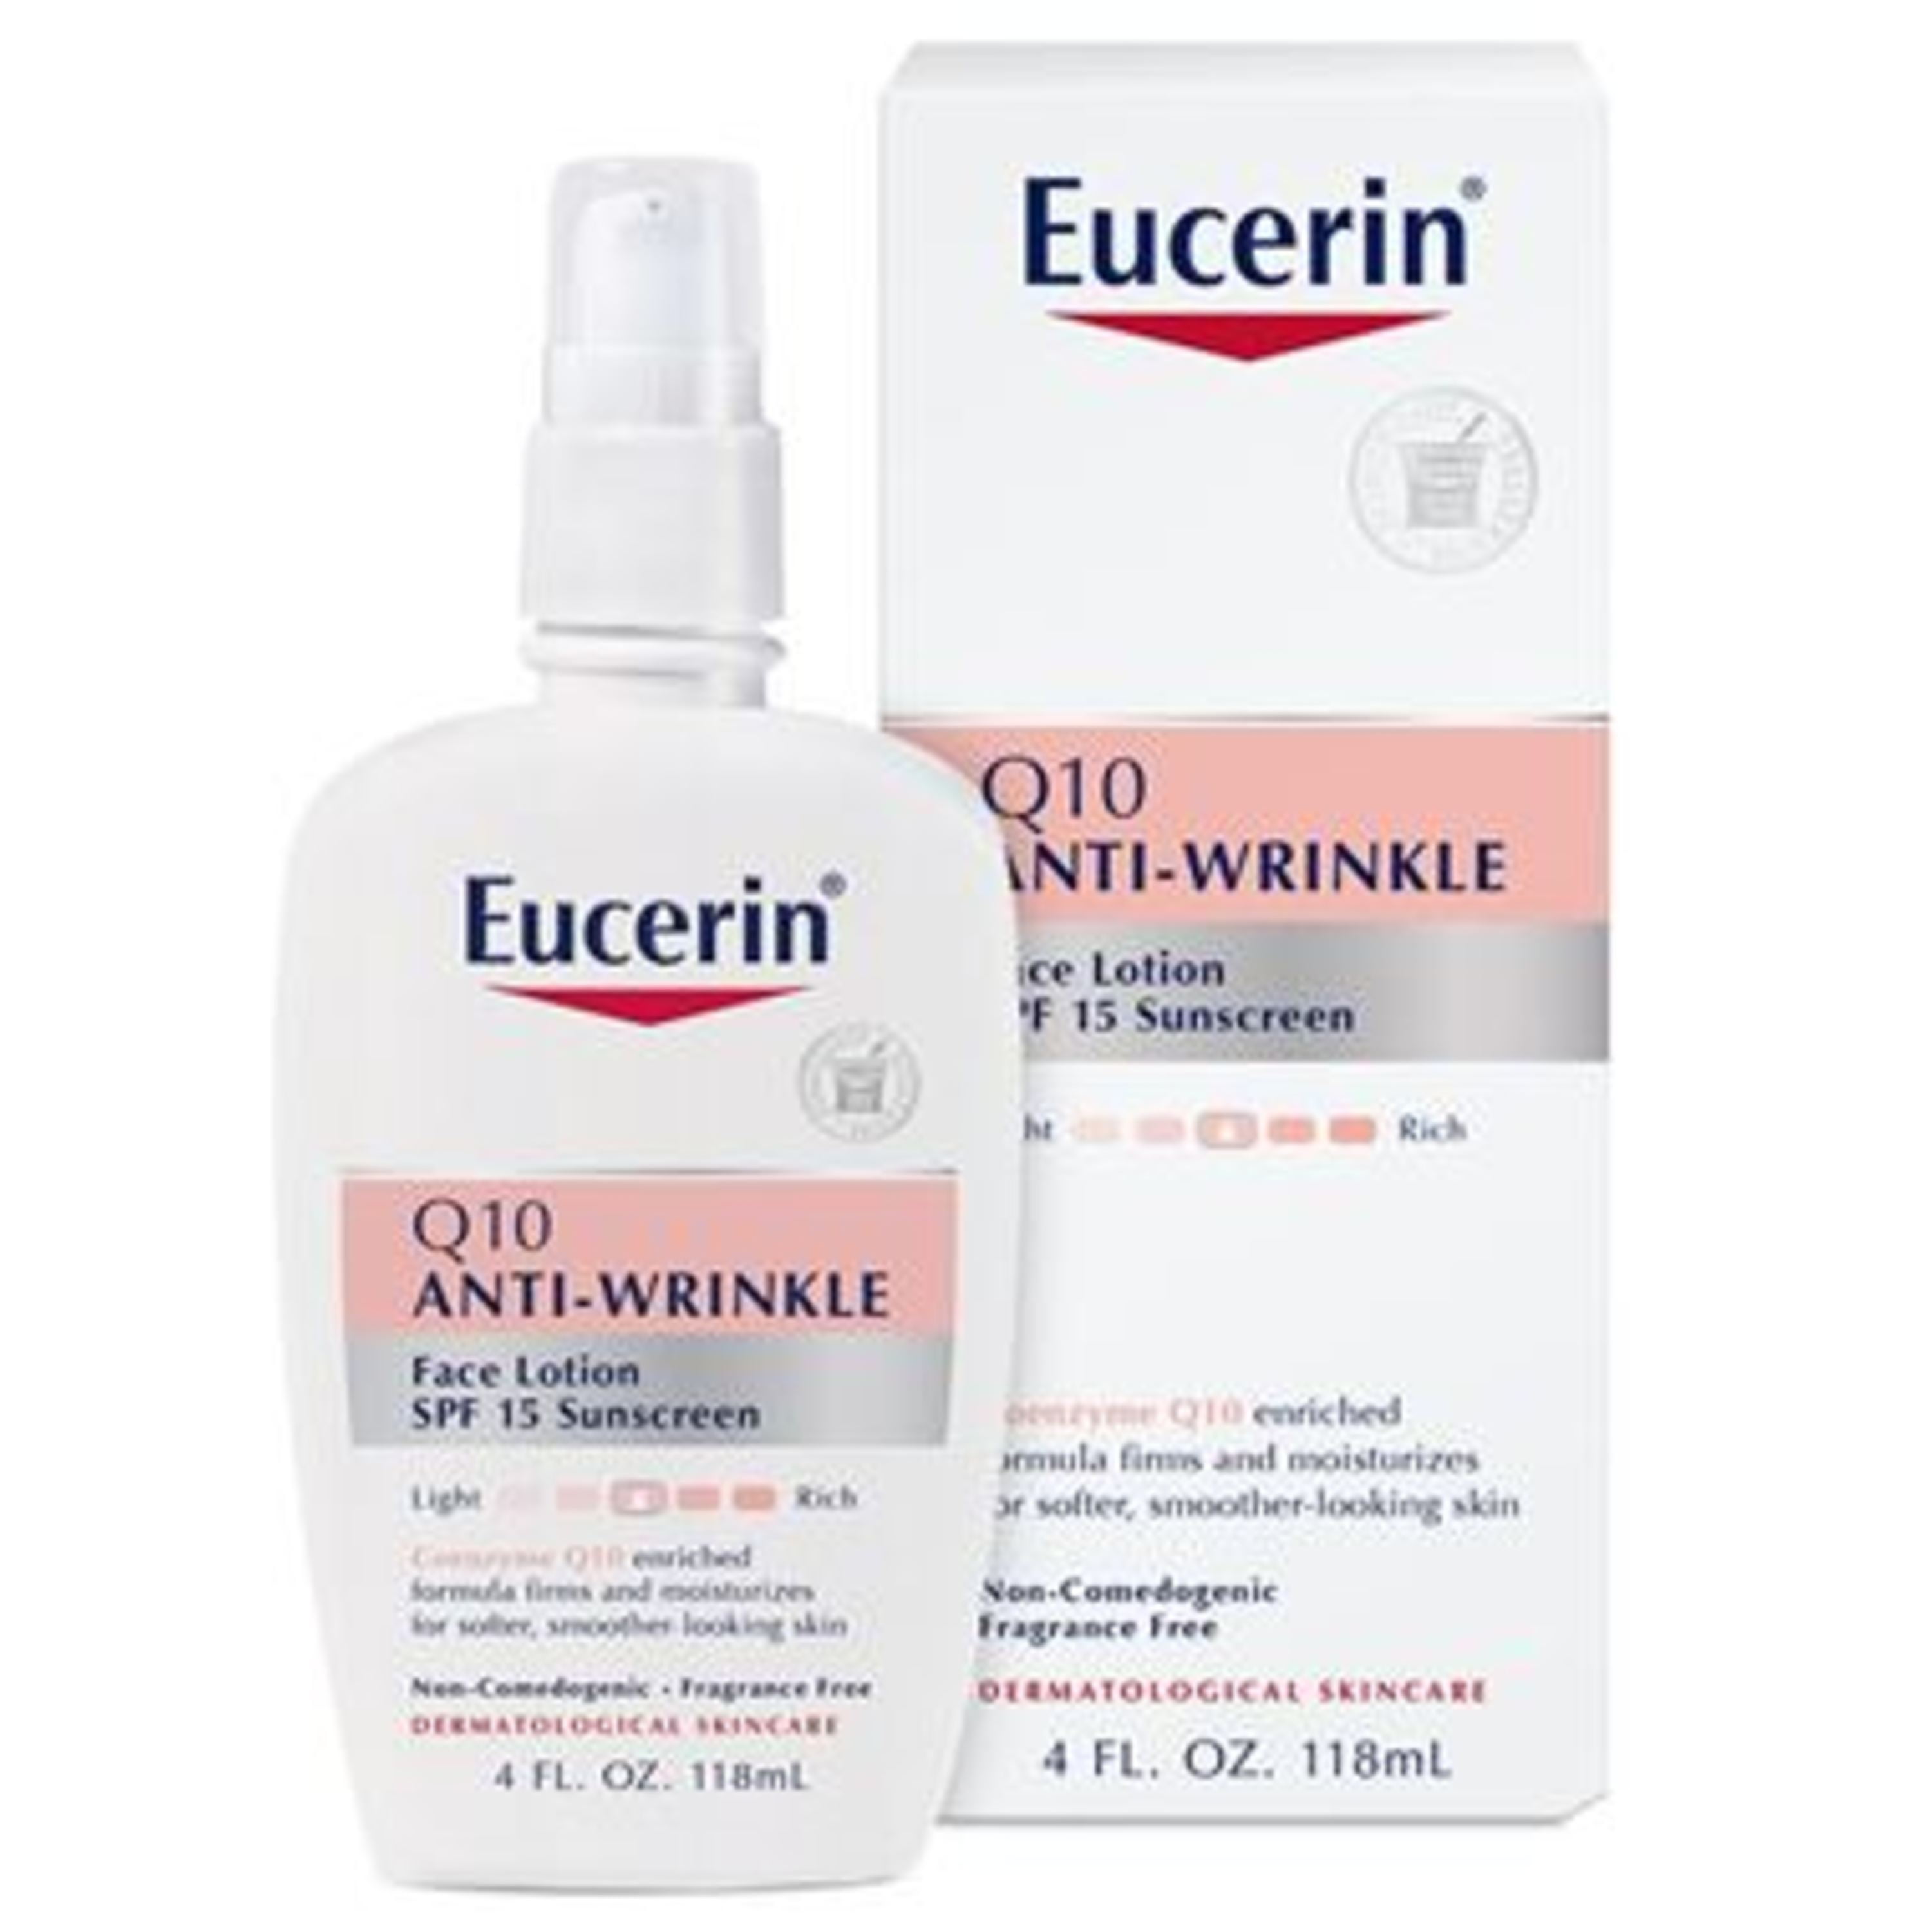 eucerin anti wrinkle q10